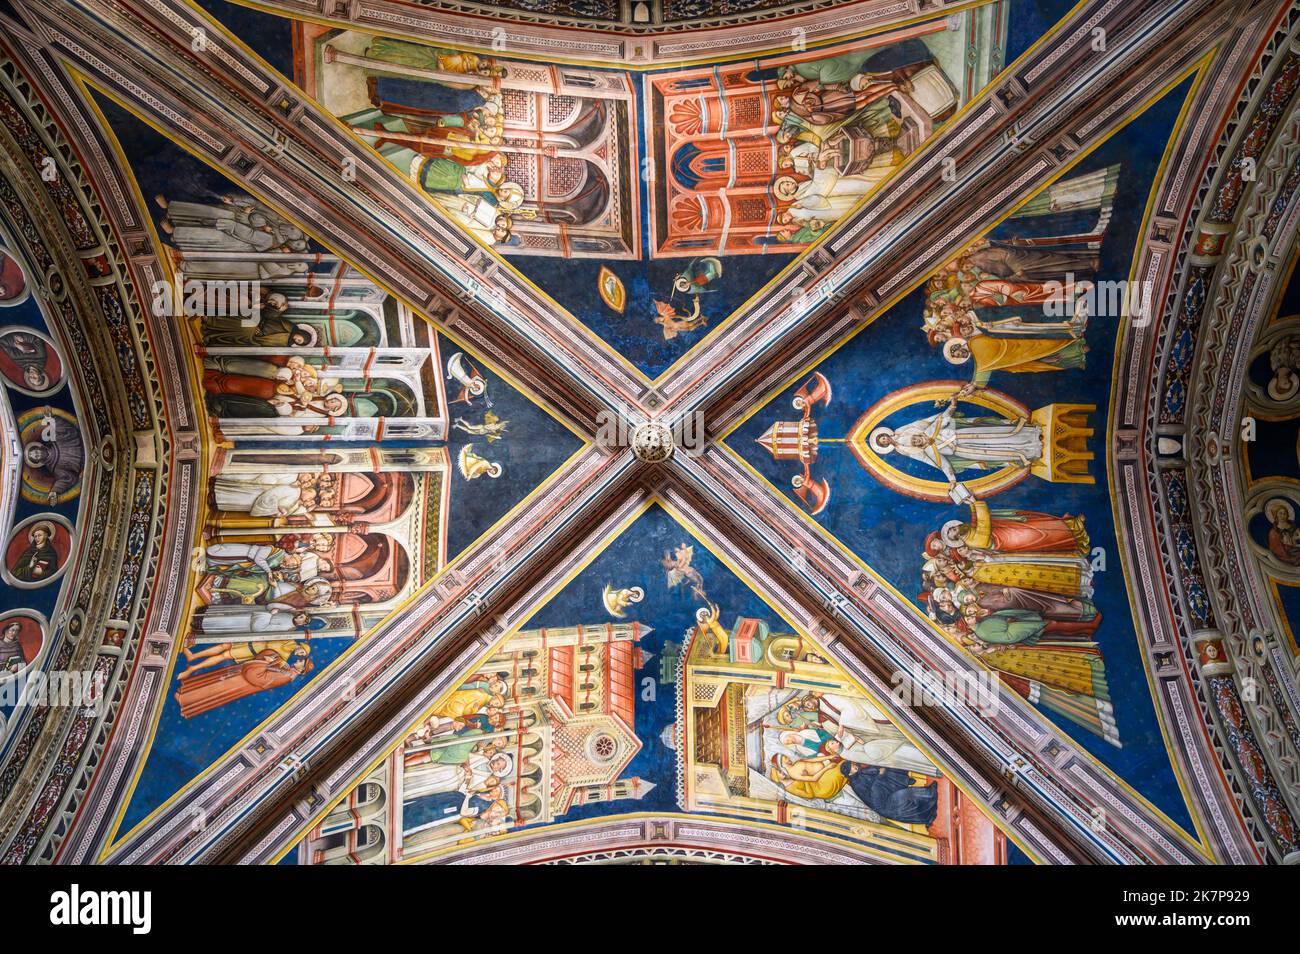 Magnificent fresco painted ceilings in the Basilica of Saint Catherine of Alexandria, Galatina, Apulia (Puglia), Italy. Stock Photo